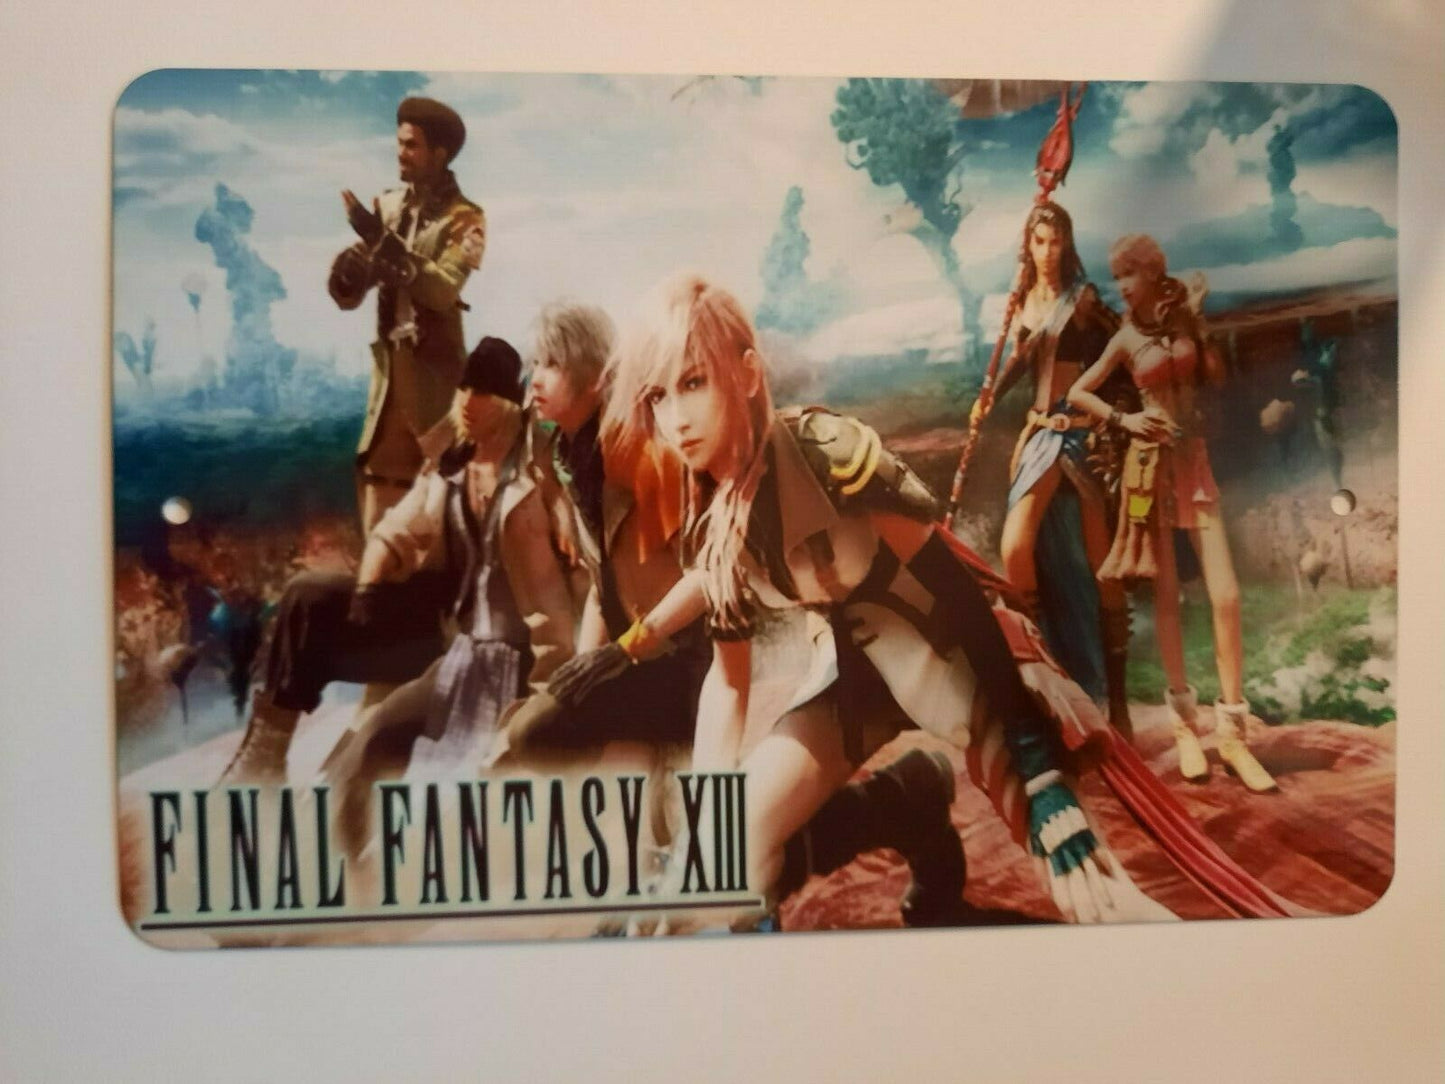 Final Fantasy 13 FFXIII 8x12 Metal Wall Sign Video Game Arcade